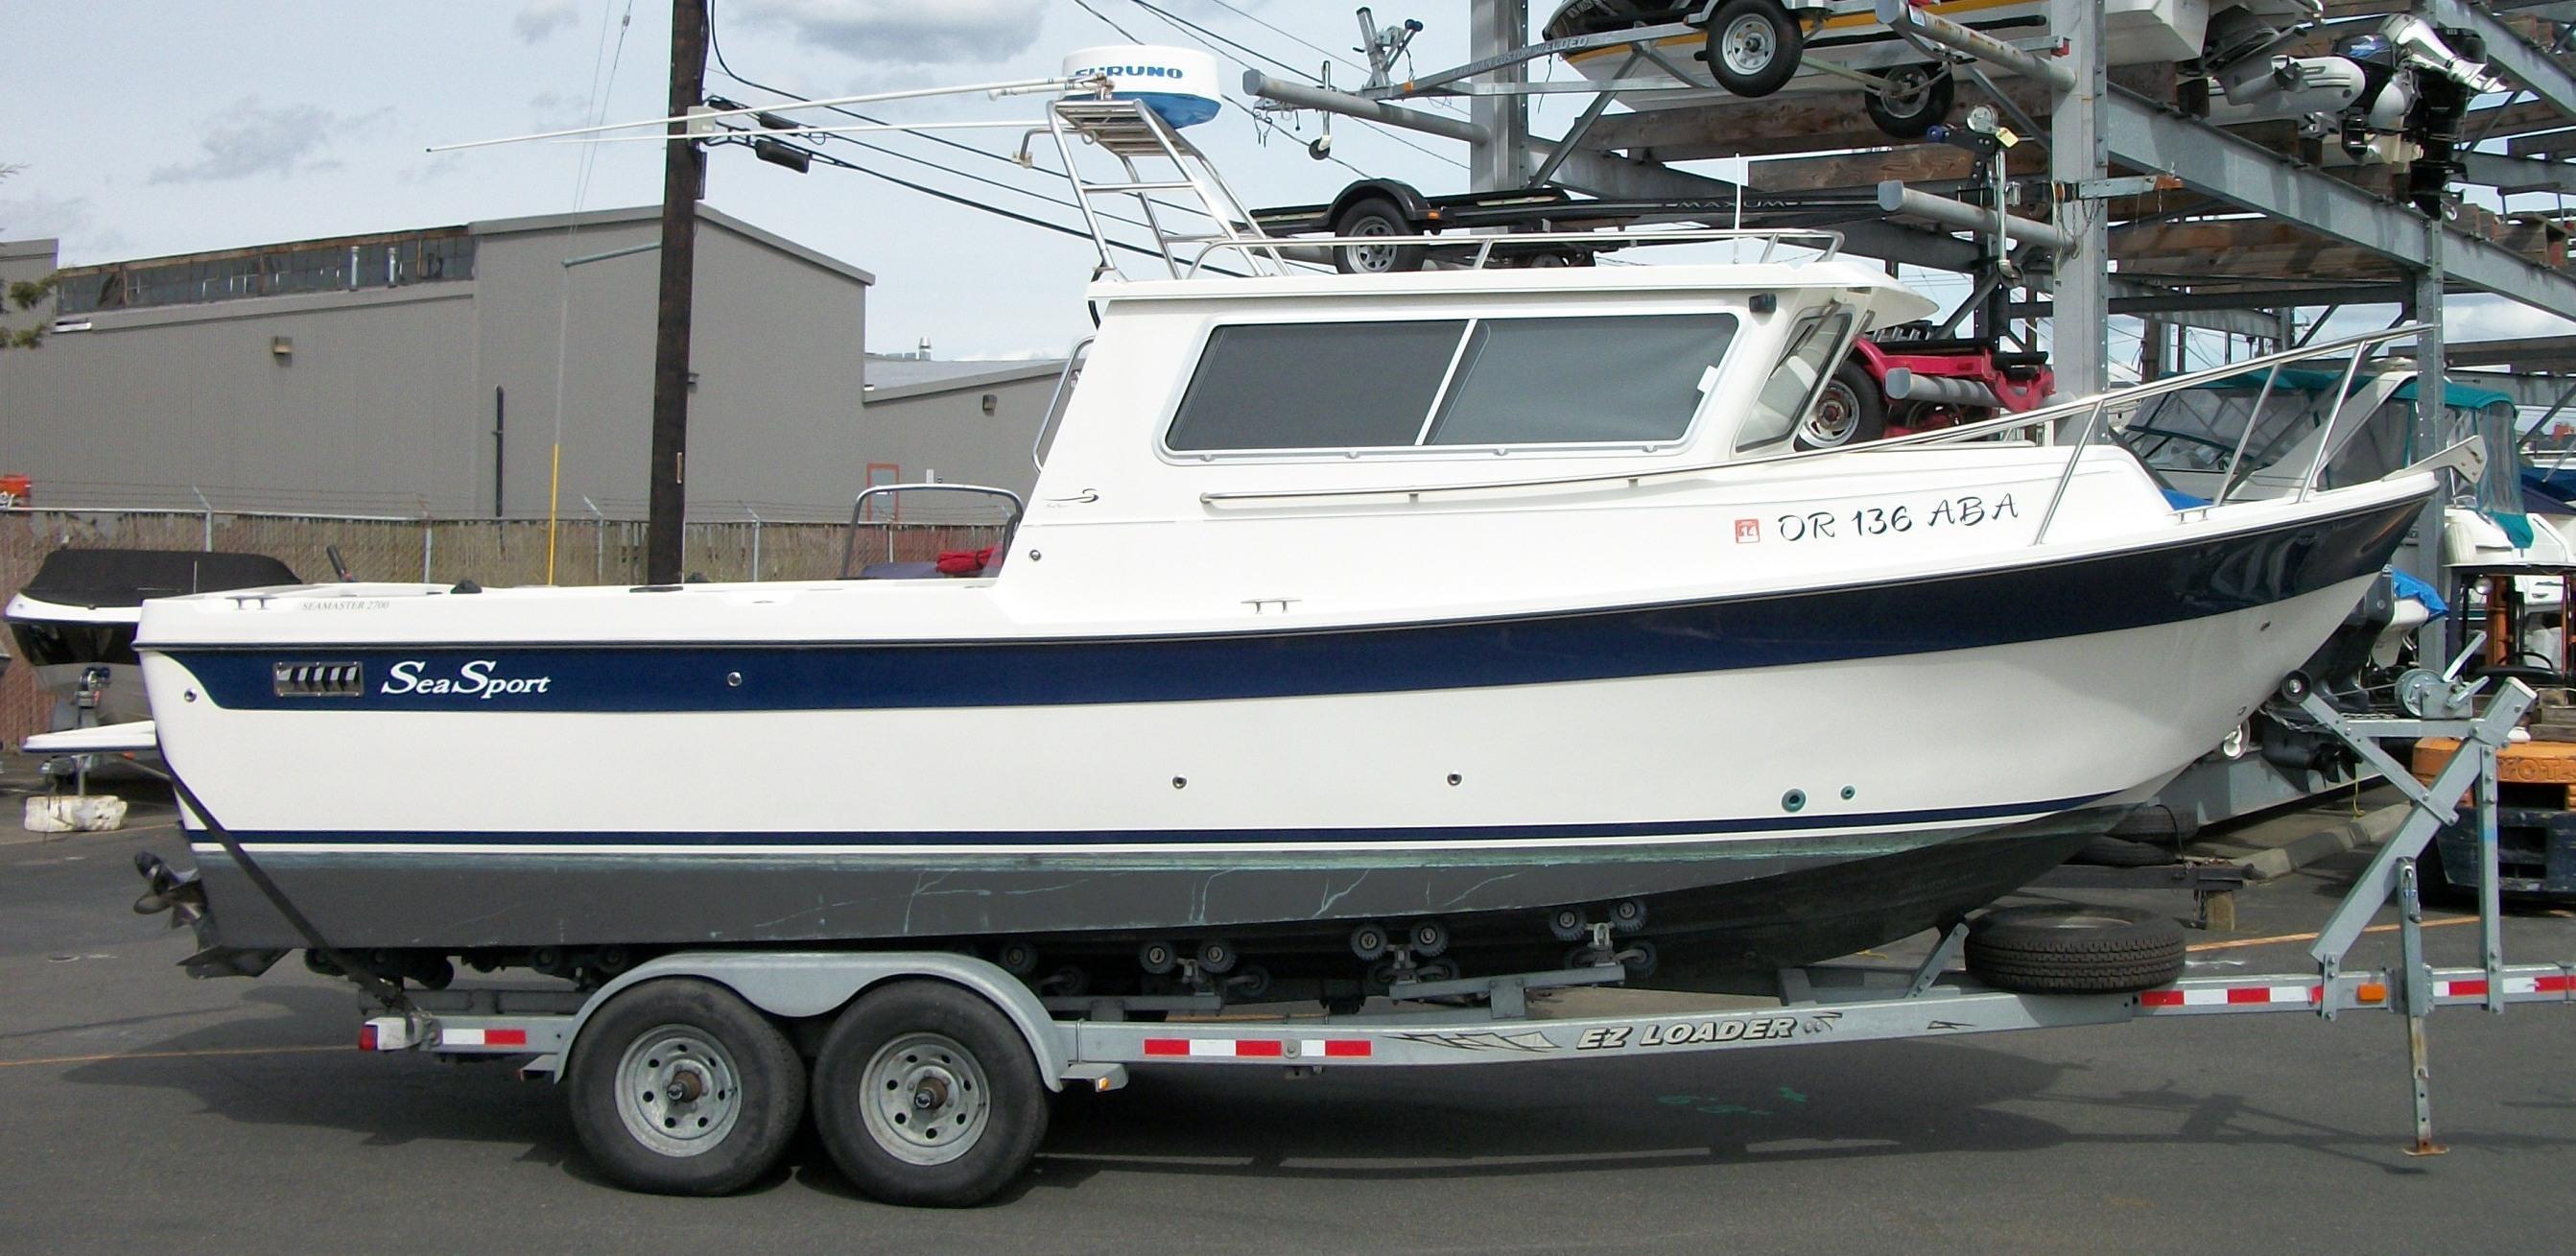 Sea Sport Seamaster 2700, Seattle